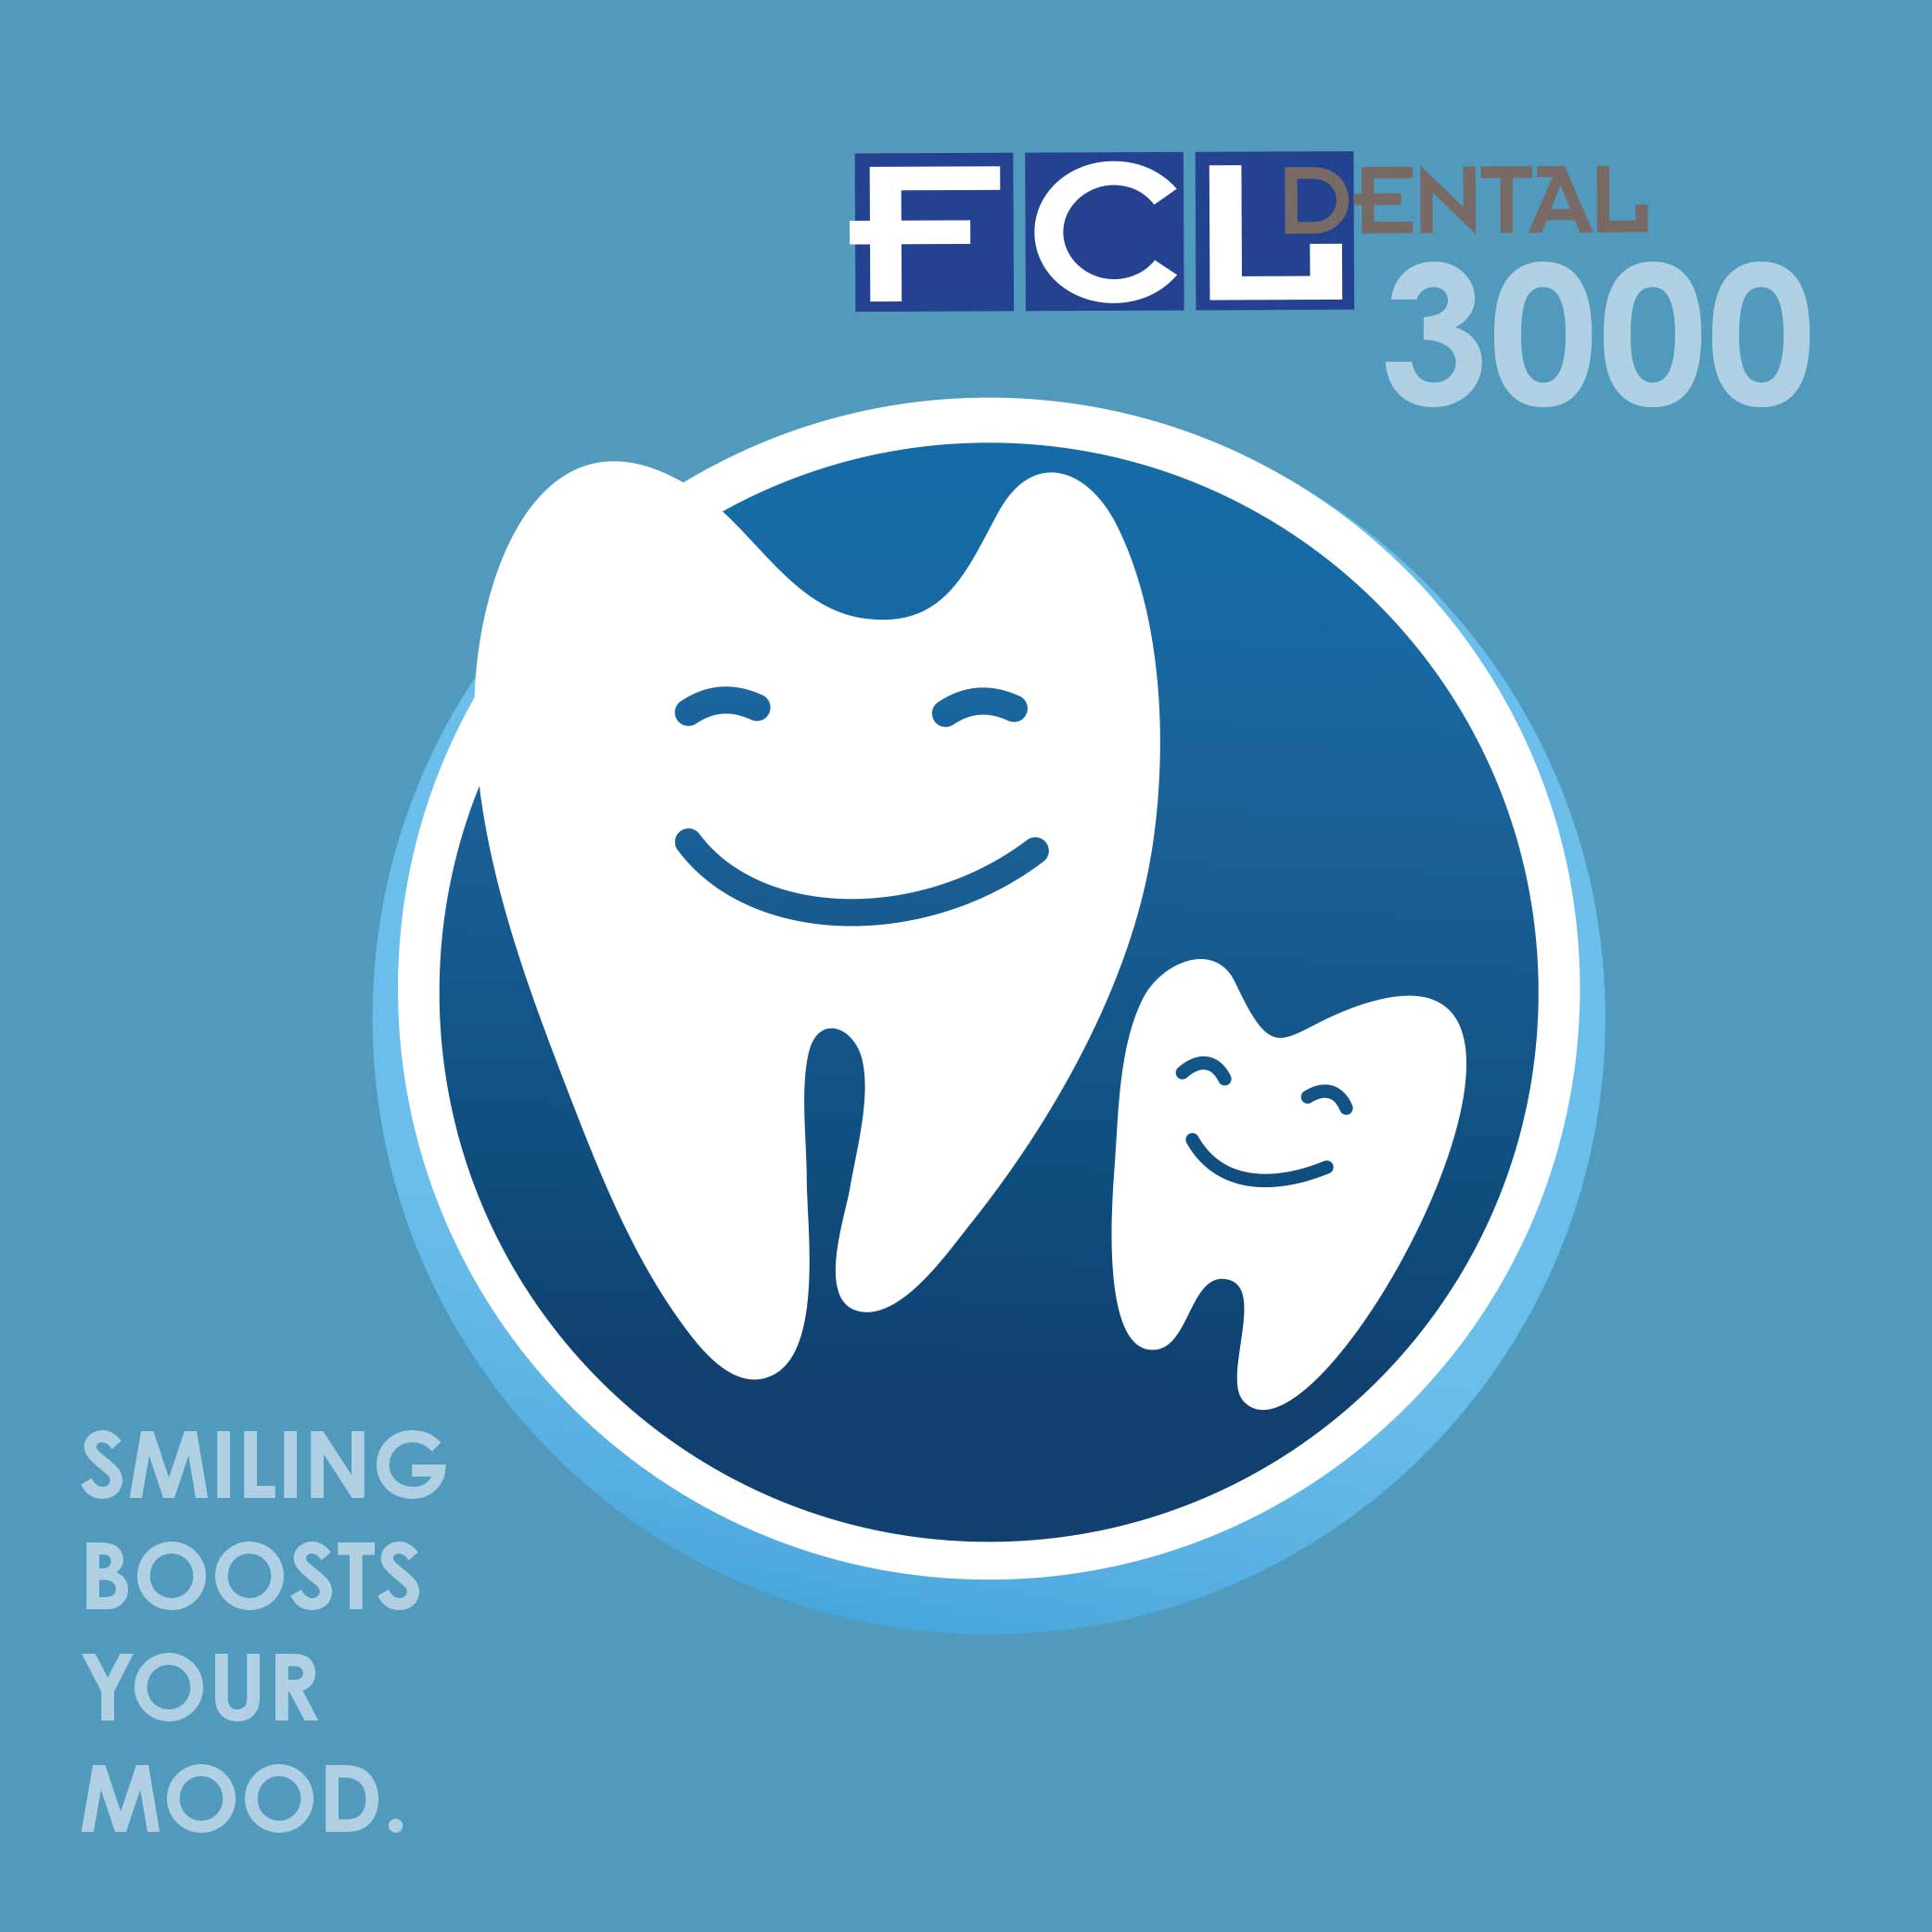 FCL Dental 3000